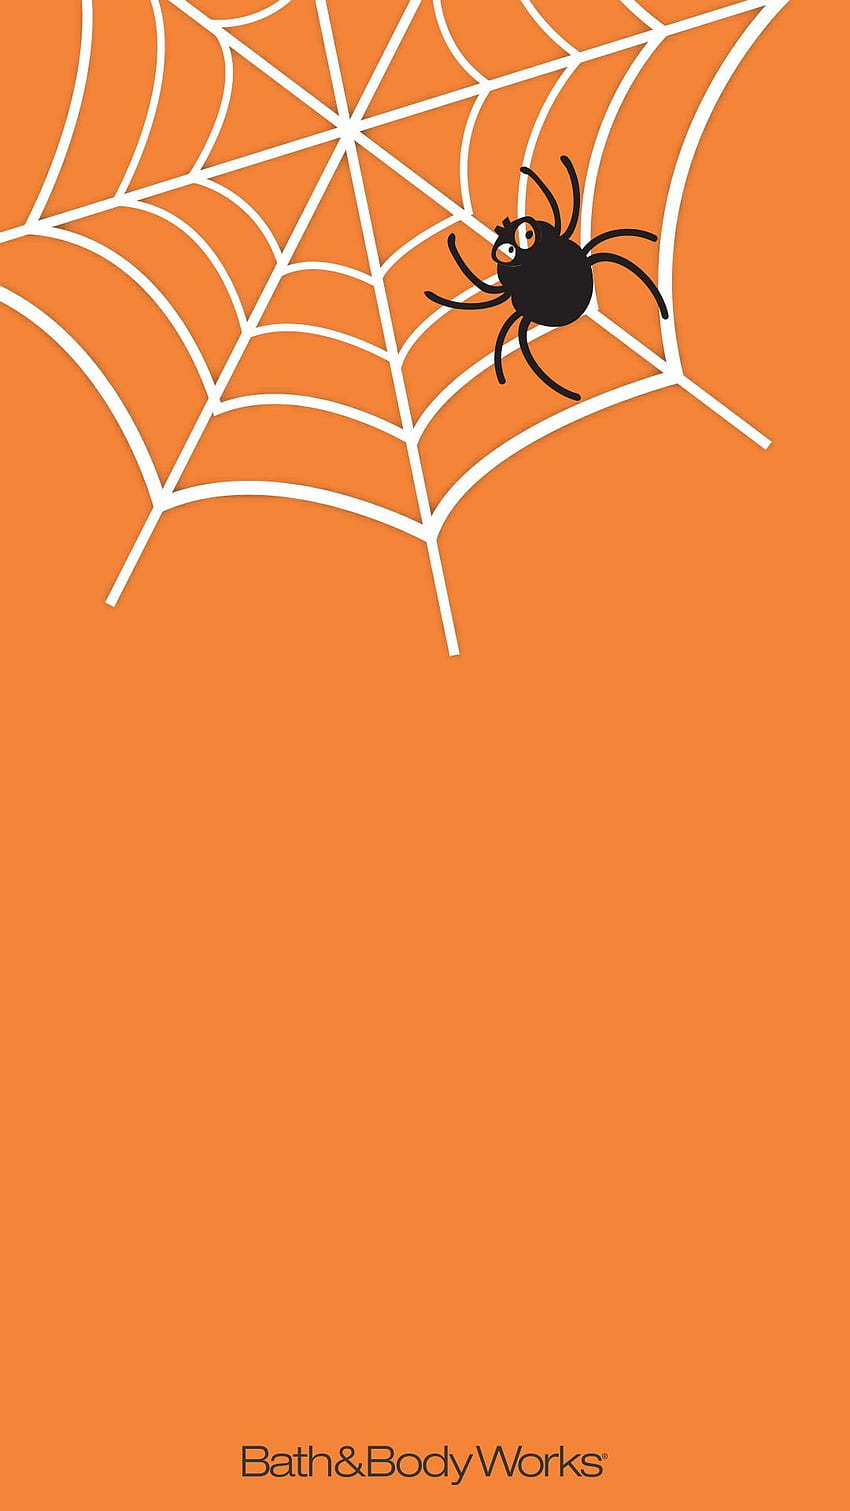 Spider web wallpaper Royalty Free Vector Image